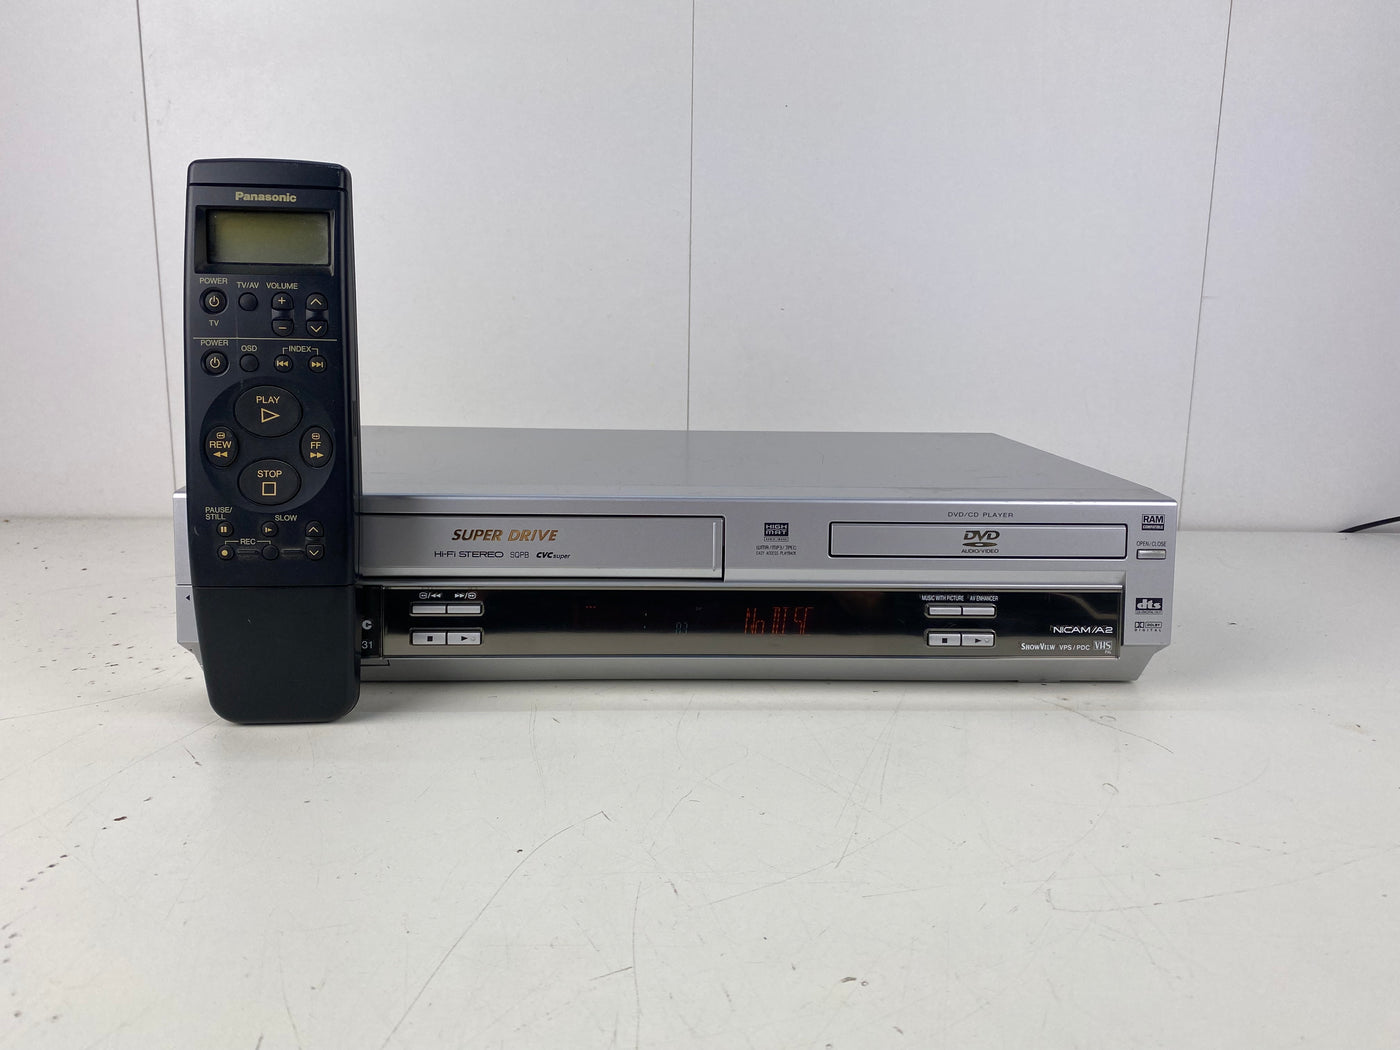 Panasonic NV-VP31 Super Drive Video Cassette Recorder DVD Combi | With Remote